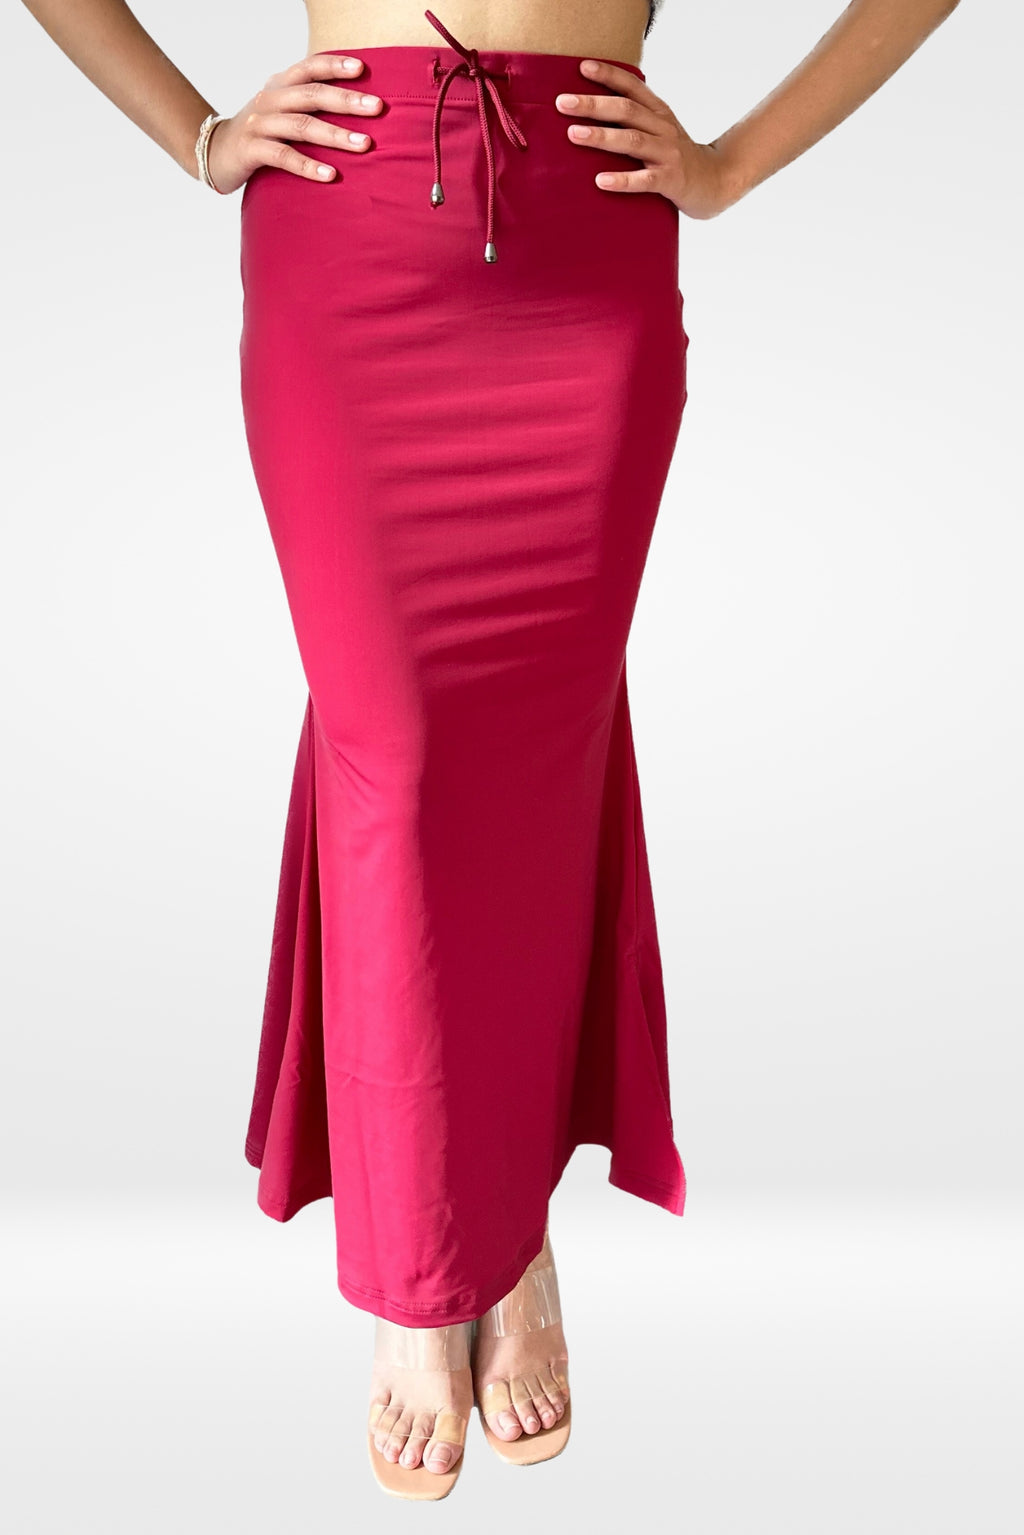 Buy shapewear online, Deep Red Cotton Jersey Shapewear For Sarees, ESTFABSW-1315